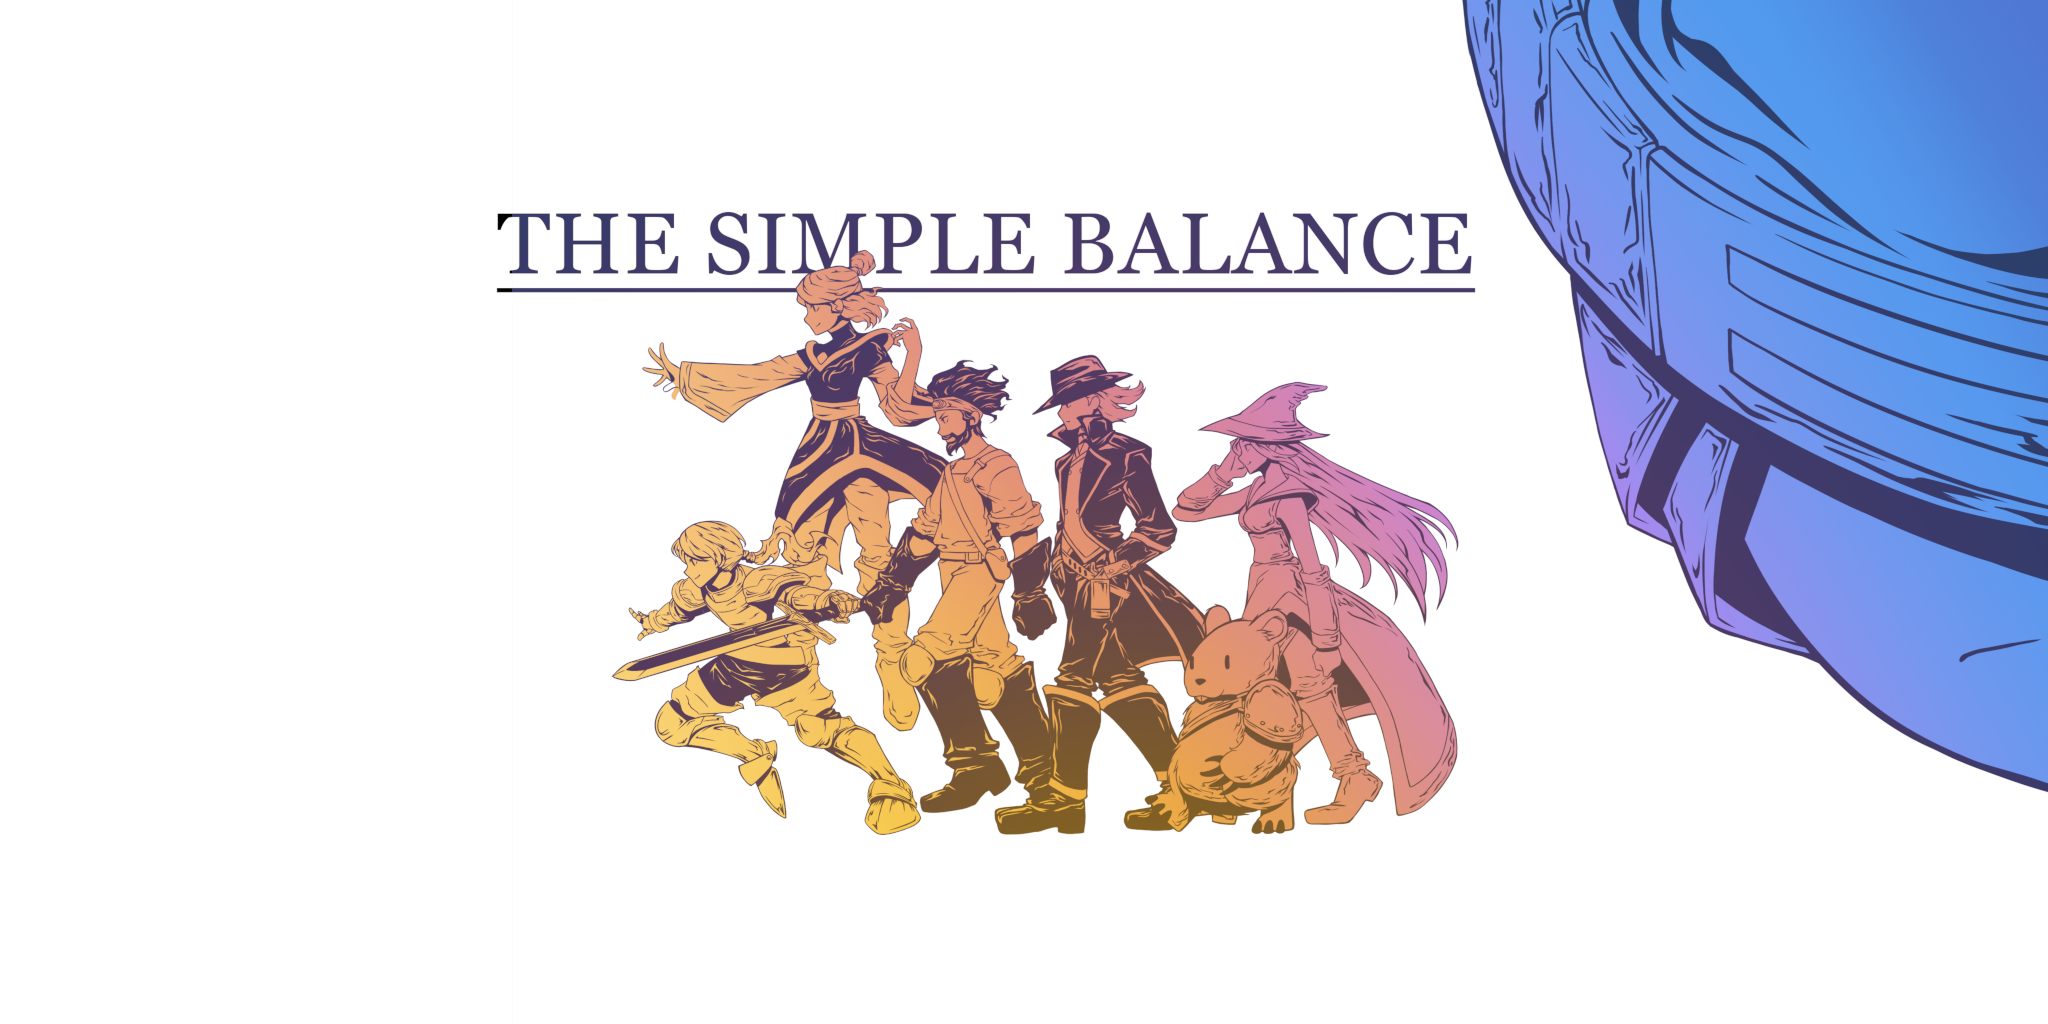 The Simple Balance